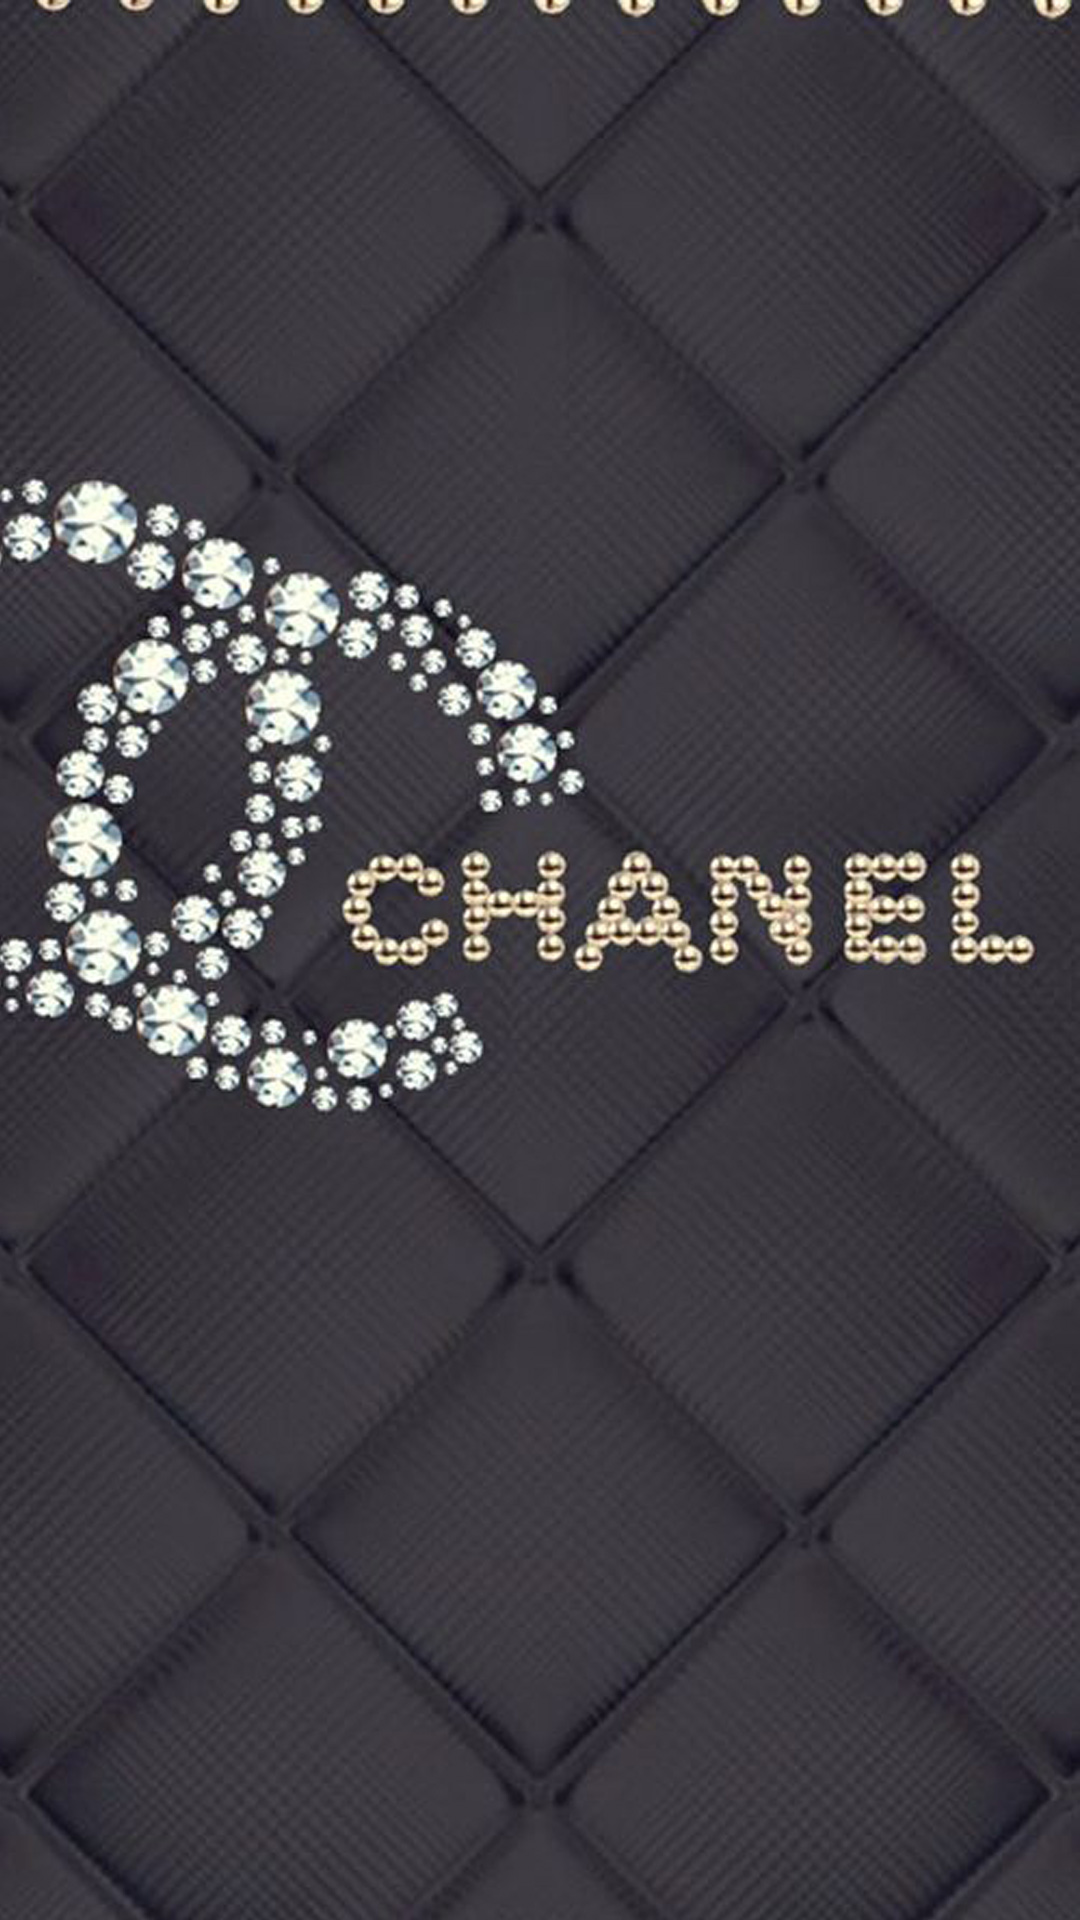 Chanel Iphone Wallpapers Hd Pixelstalk Net